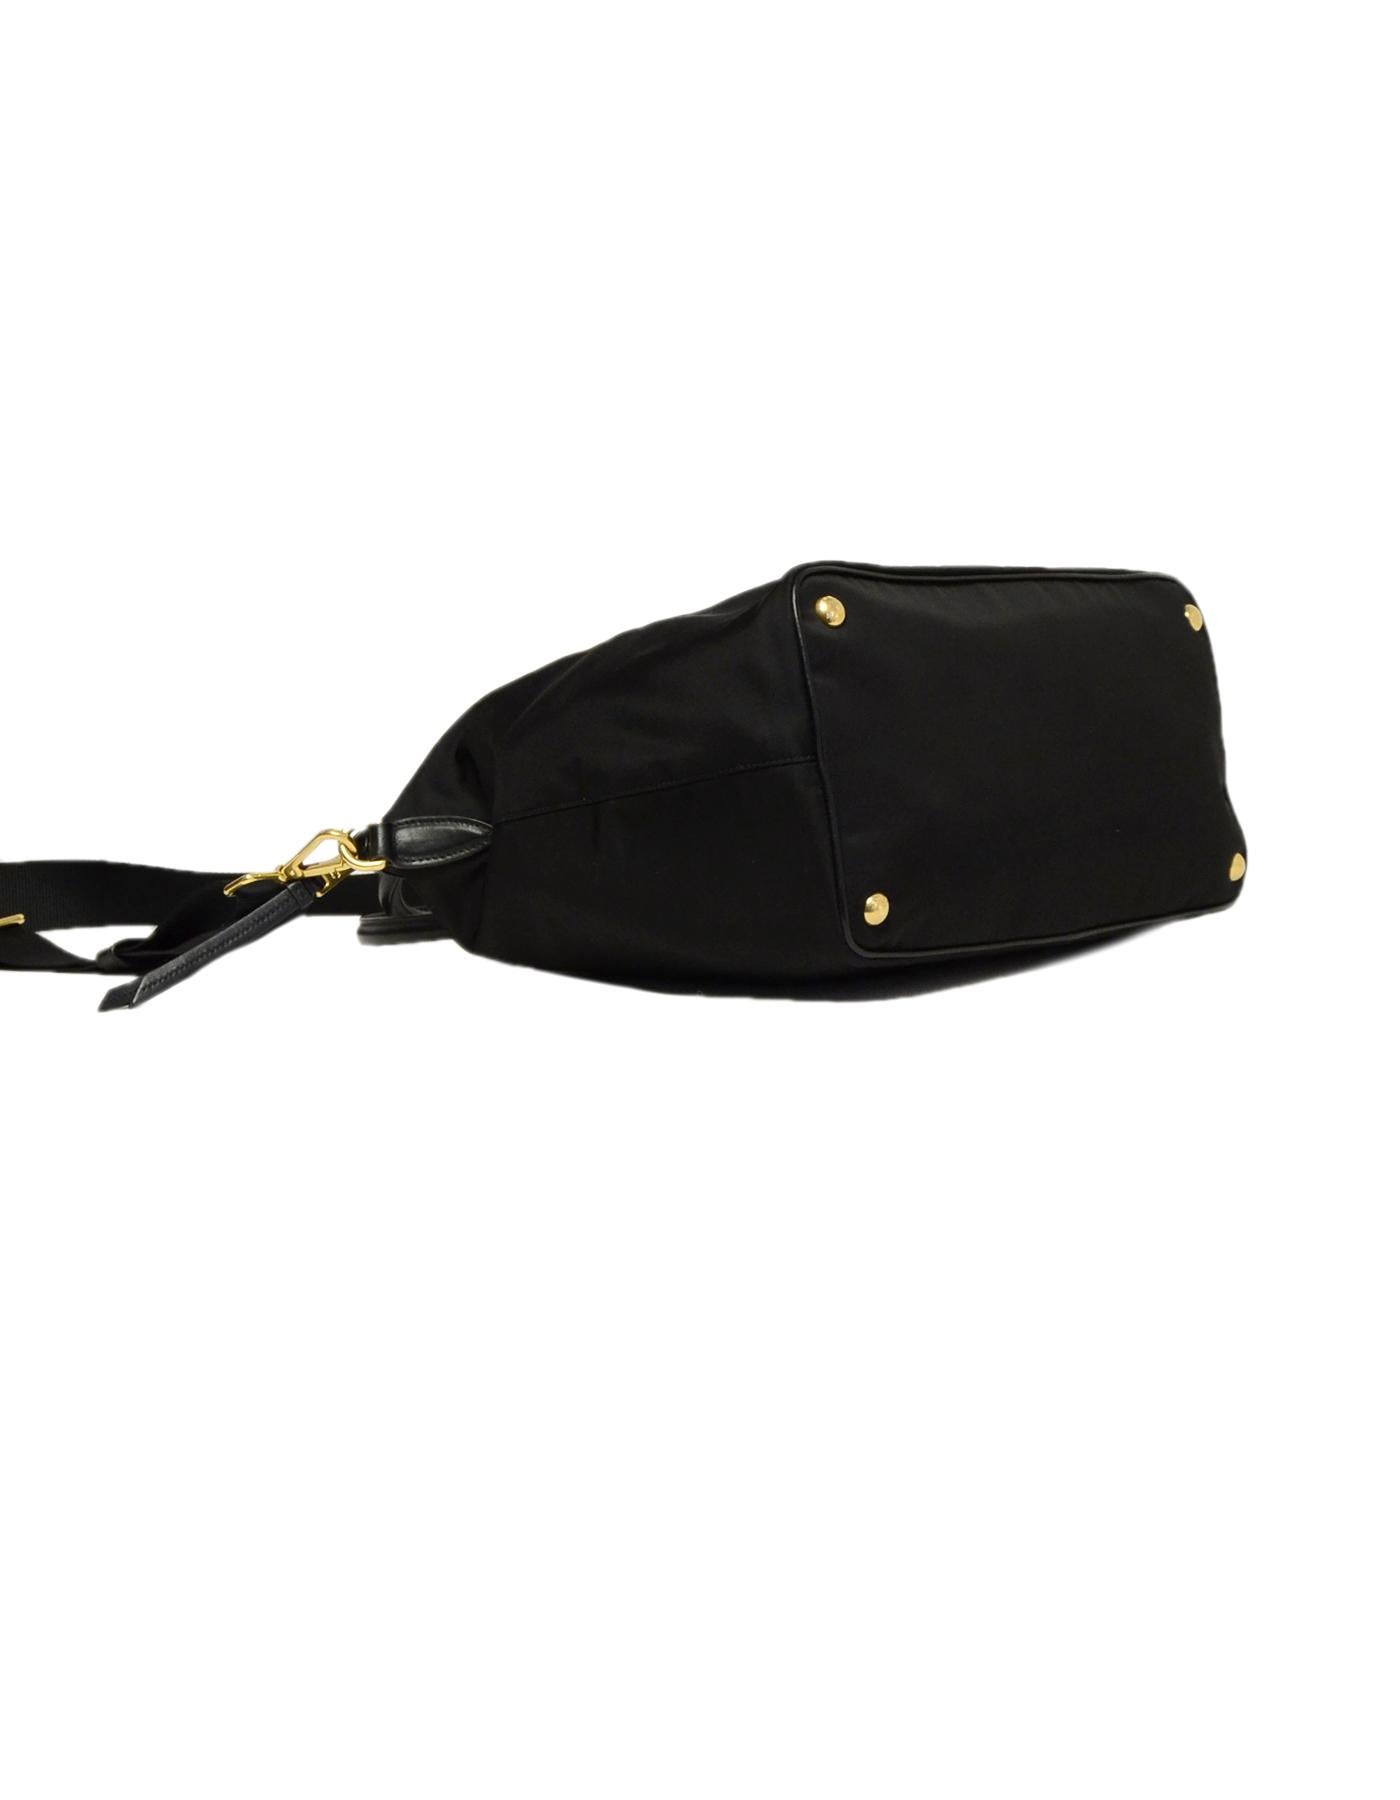 Women's Prada Black Nylon/Leather Zip Top Tote Bag